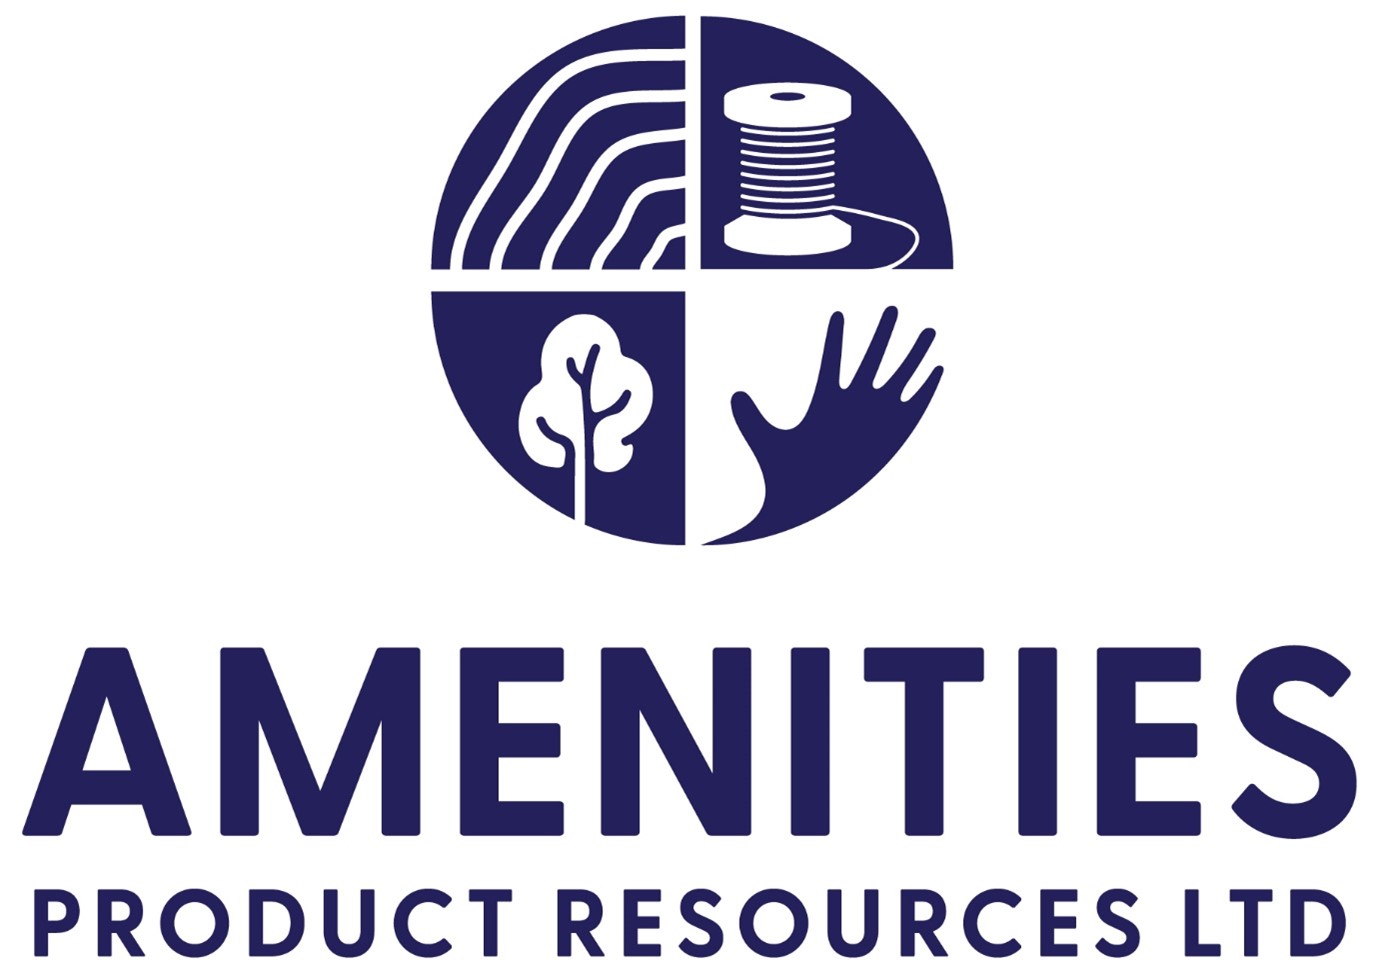 Amenities Product Resource Ltd.